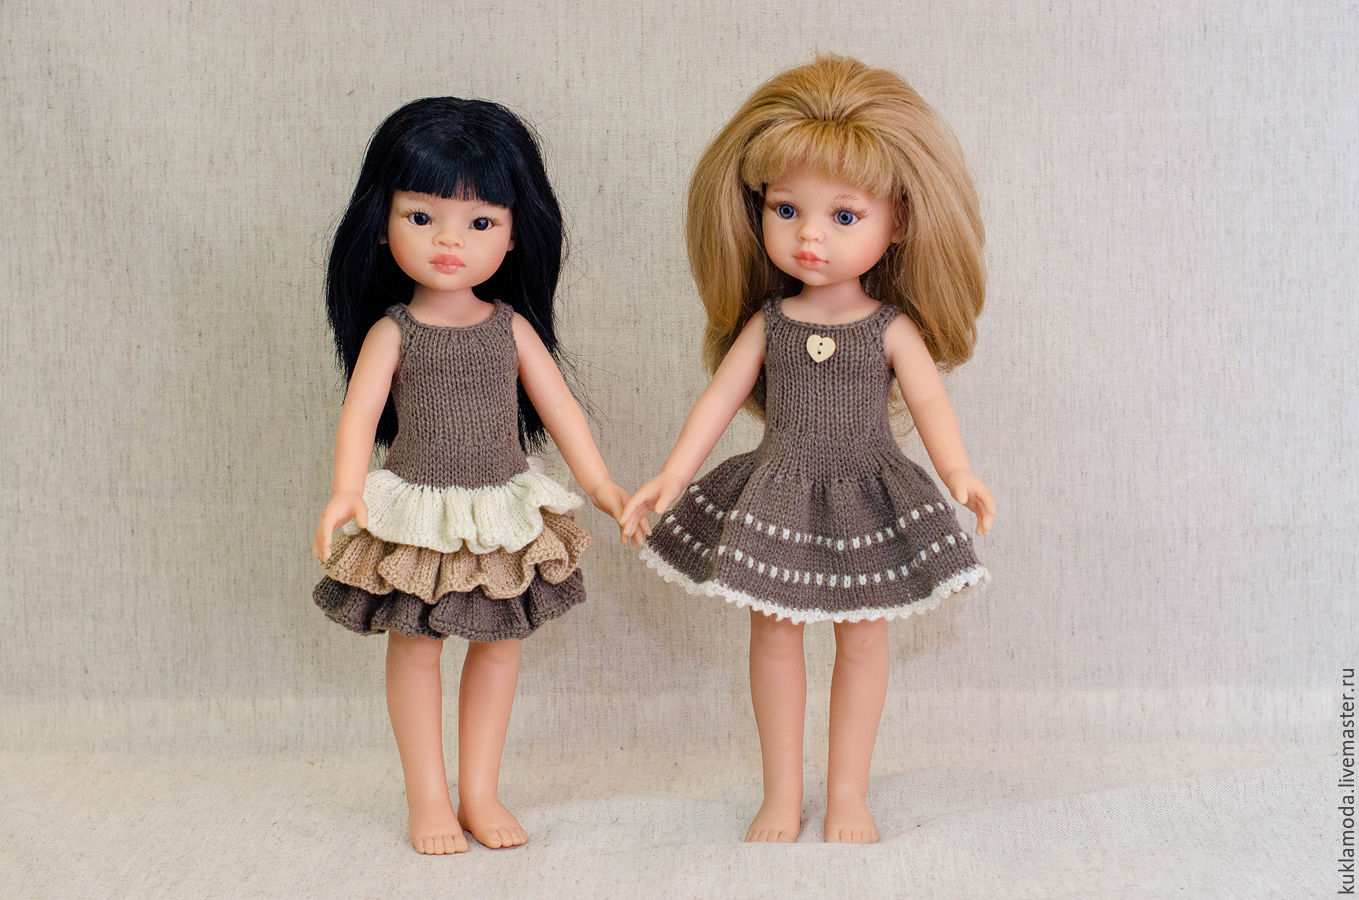 Одежда для кукол 32 см. Кукла Паола Рейна. Паола Рейна куклы 32 см. Одежда для кукол Паола Рейна 32 см. Платья для куклы Паола Рейна 32 см.